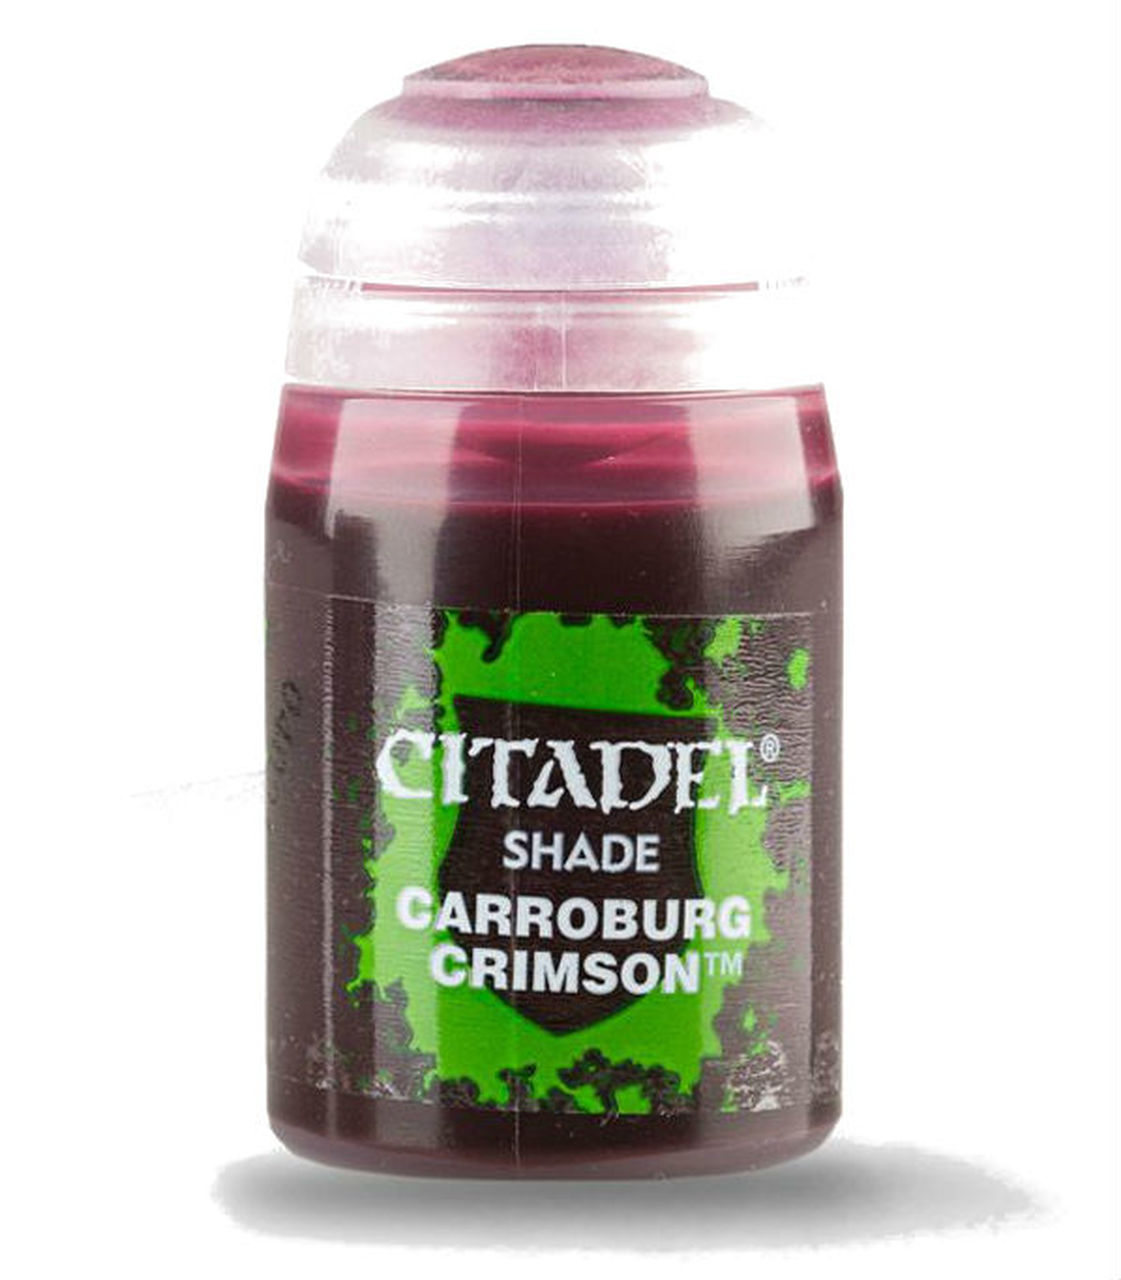 Citadel Paint: Shade - Carroburg Crimson 24ml